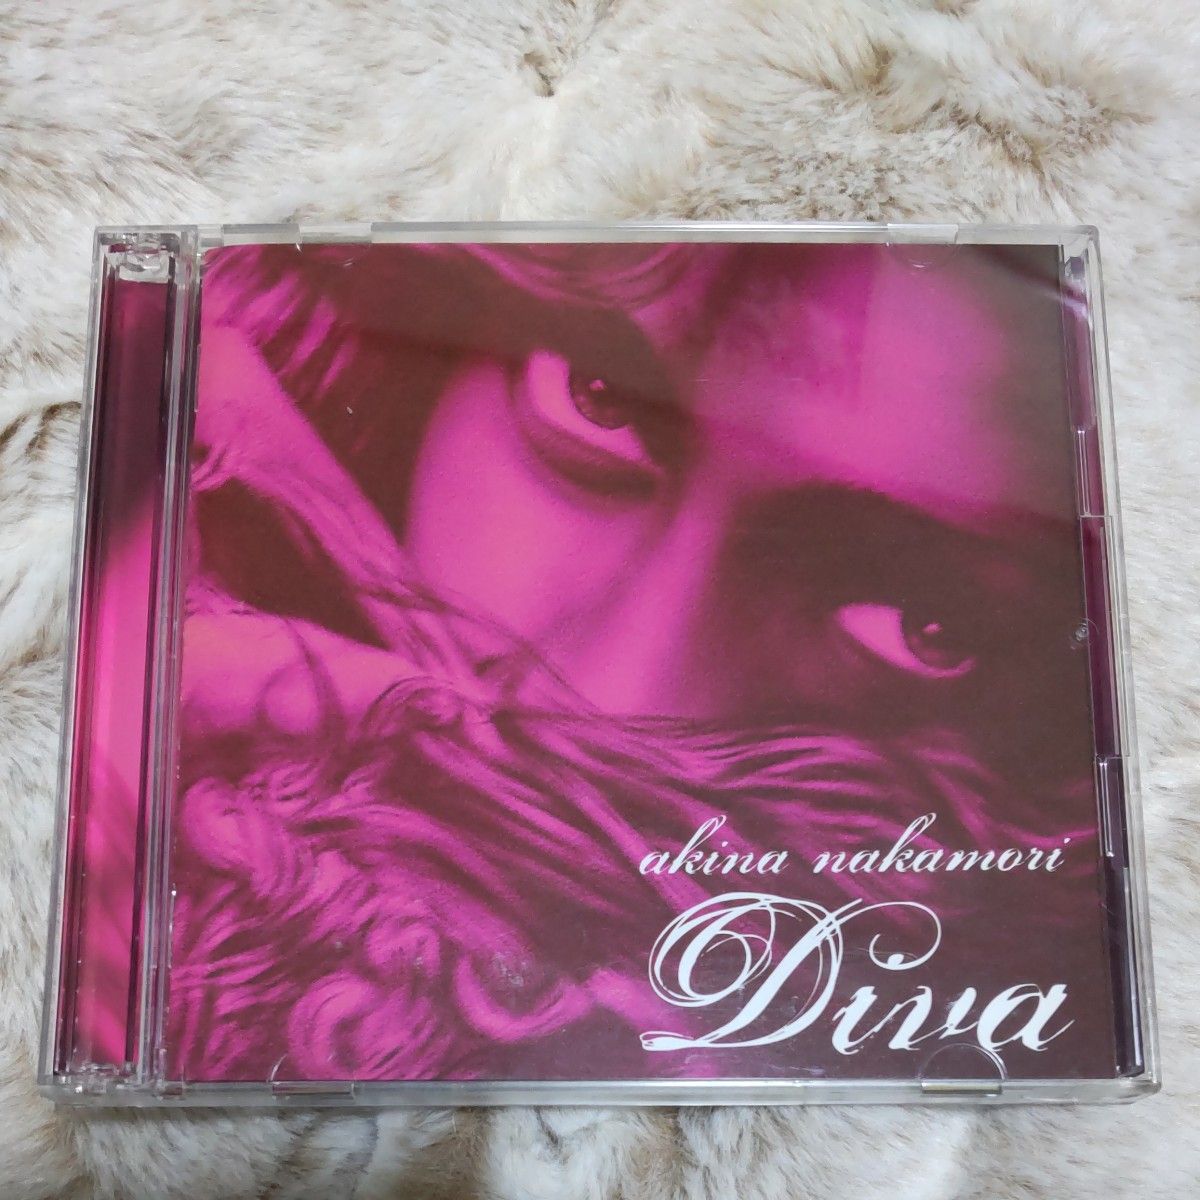 DIVA (初回限定盤CD2枚組)  中森明菜